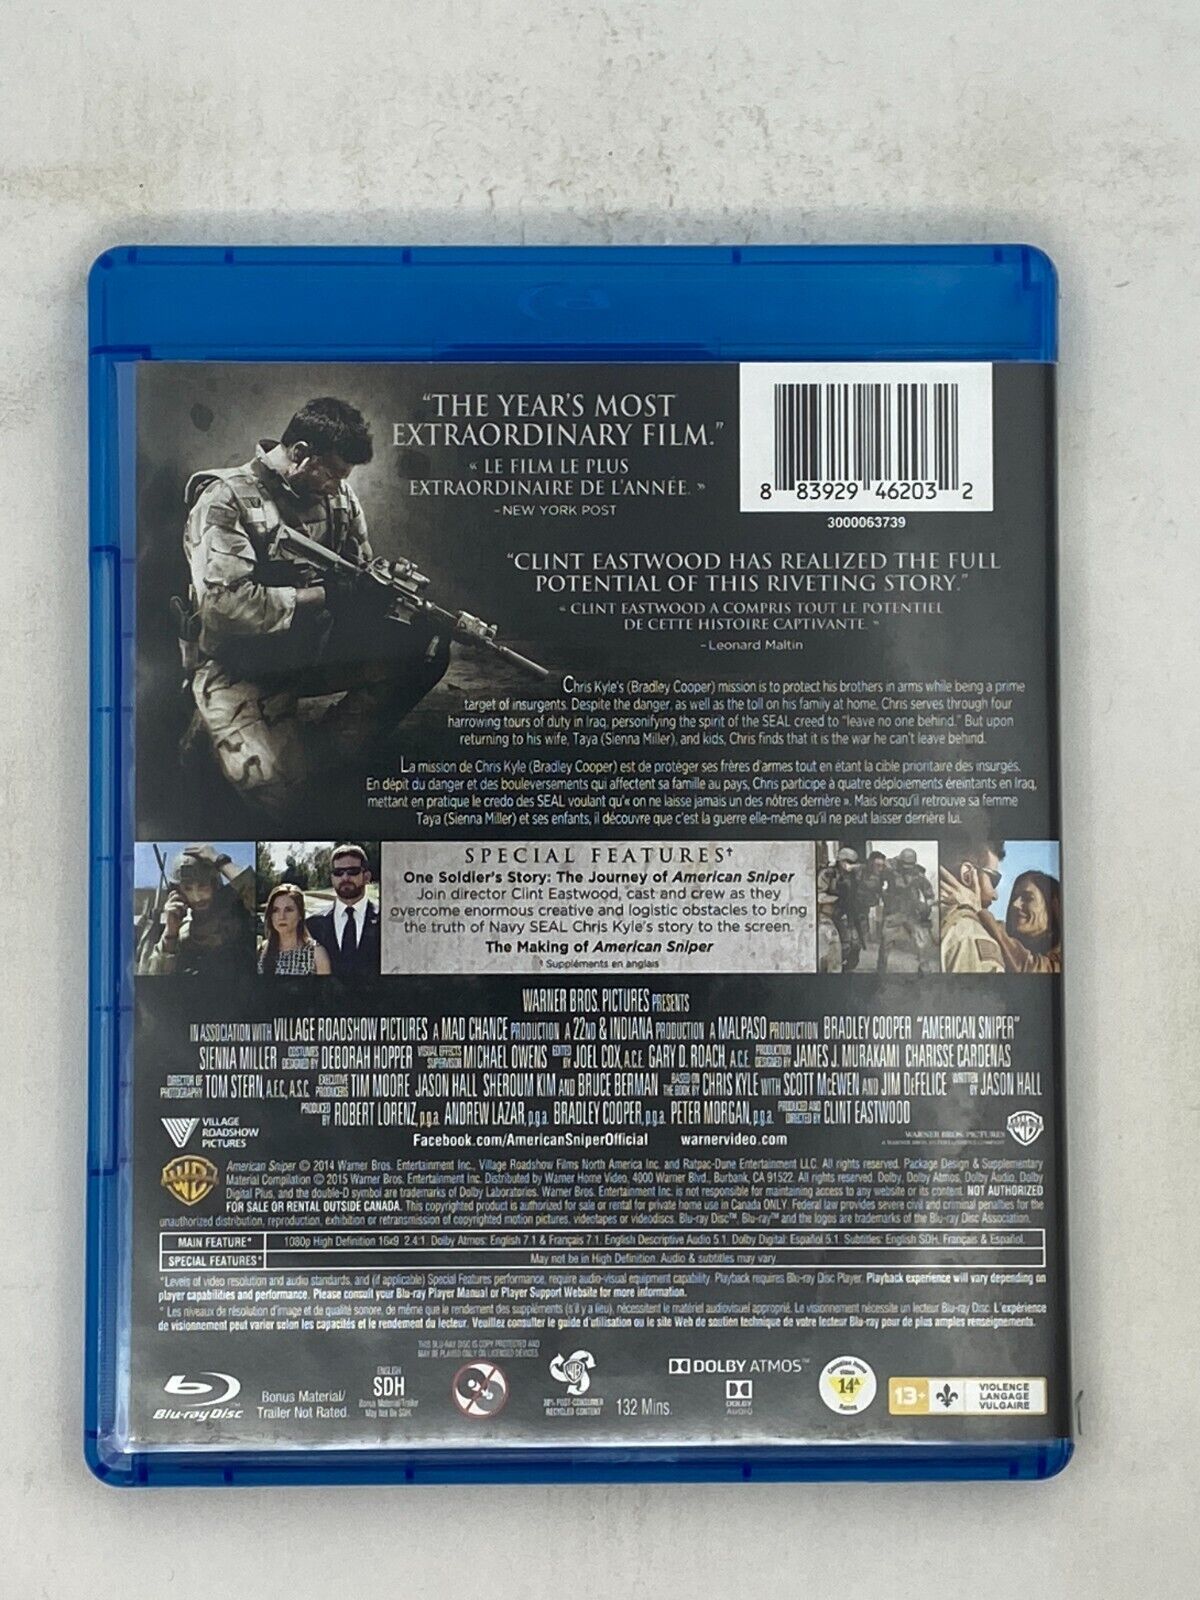 American sniper - (2 discs) Blu-ray / DVD - Bradley Cooper